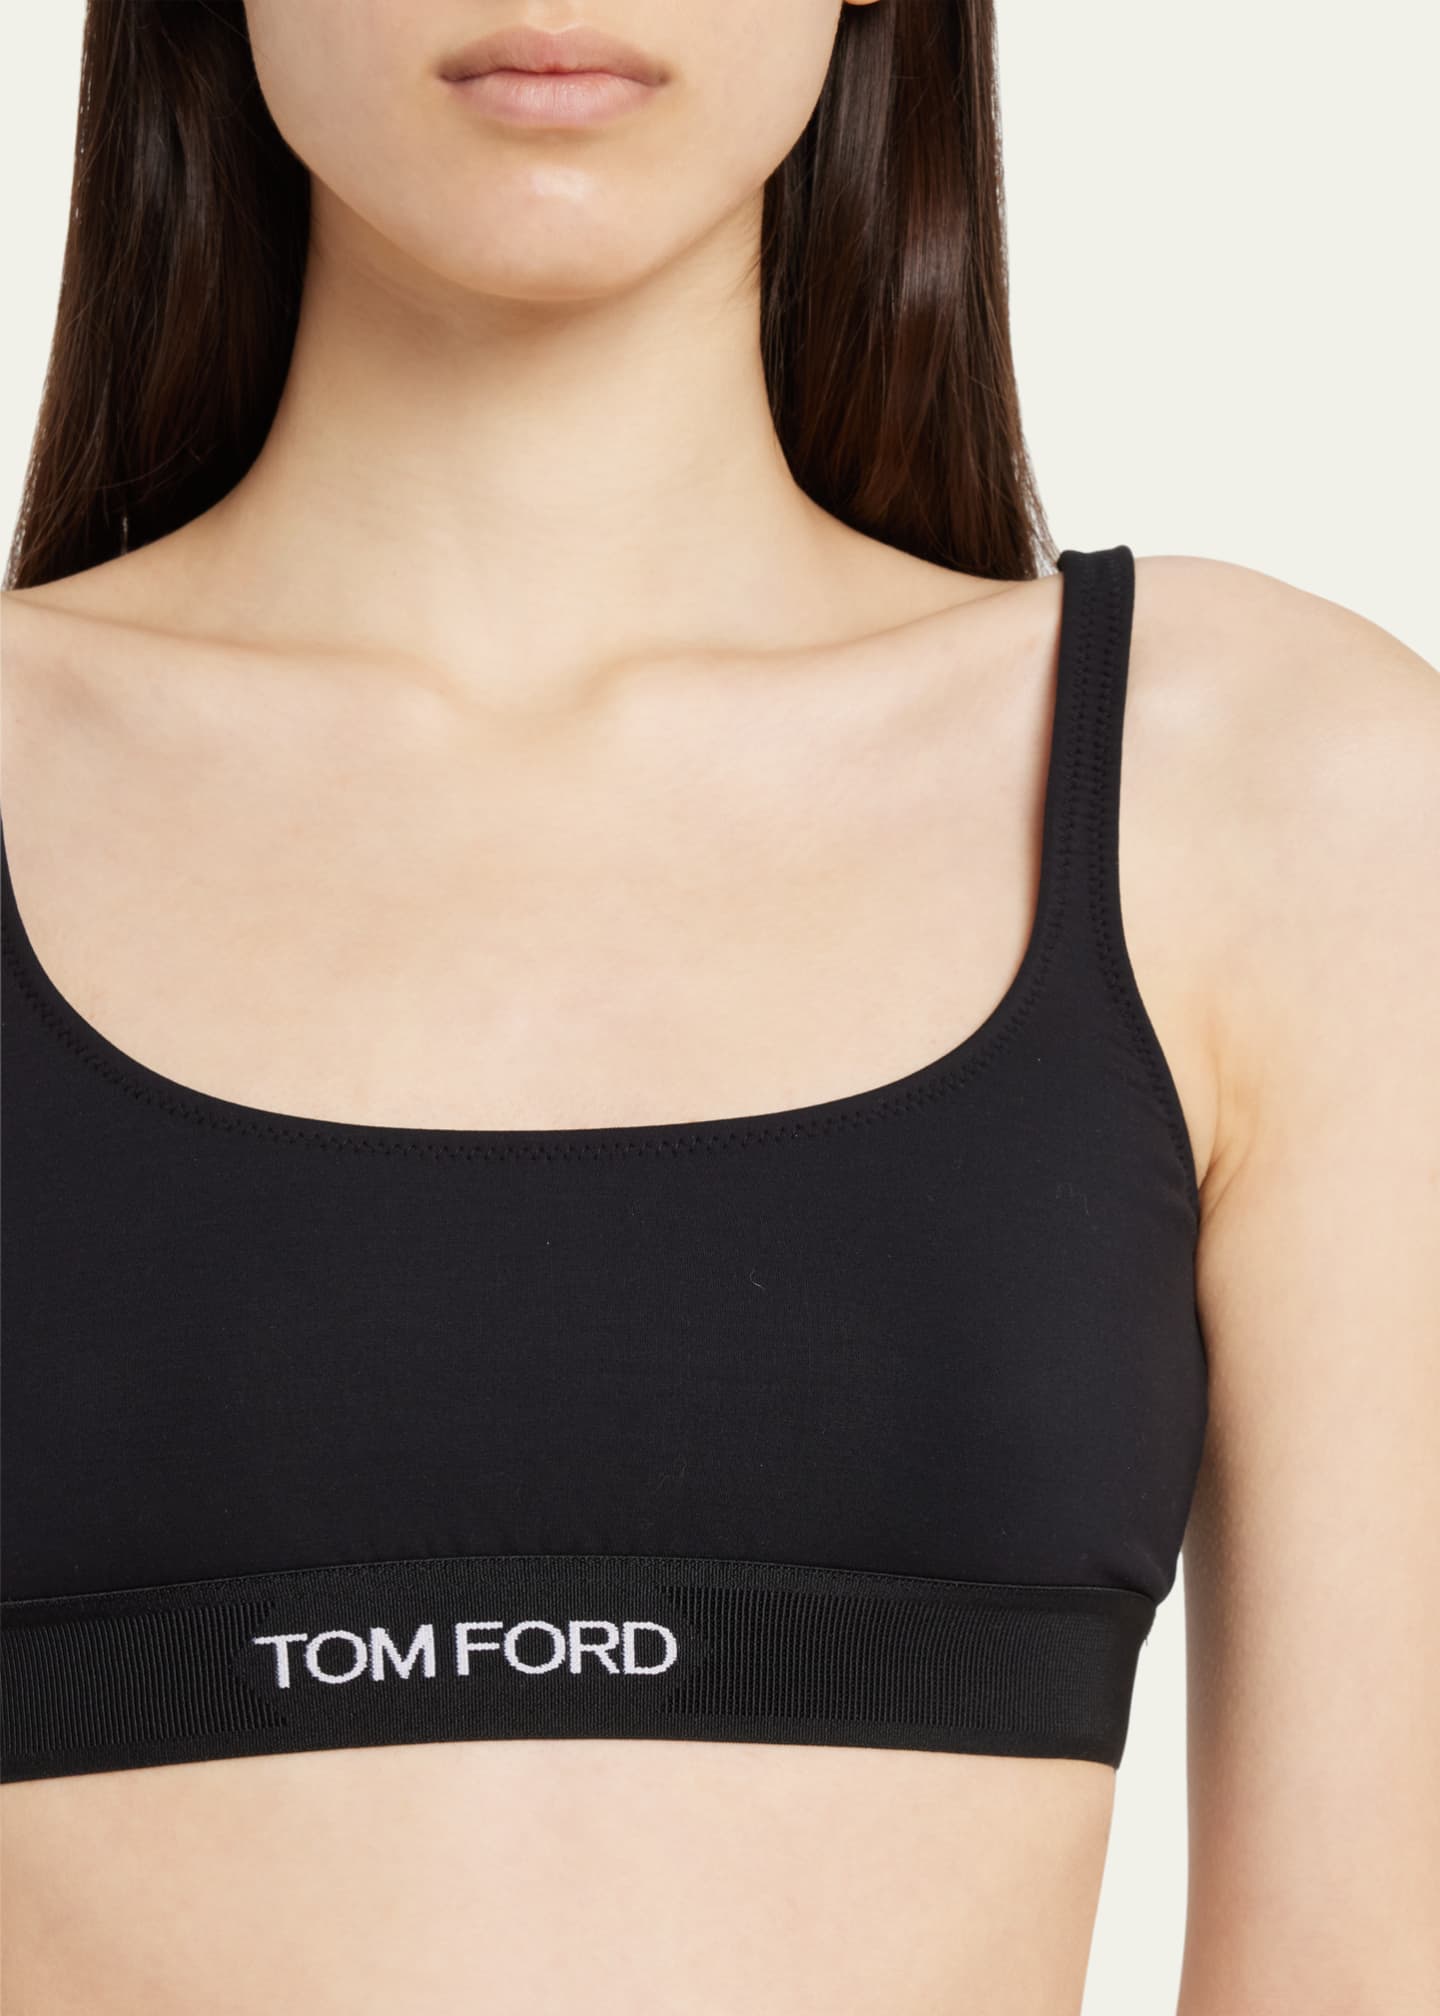 TOM FORD Contrast Logo-Band Bra